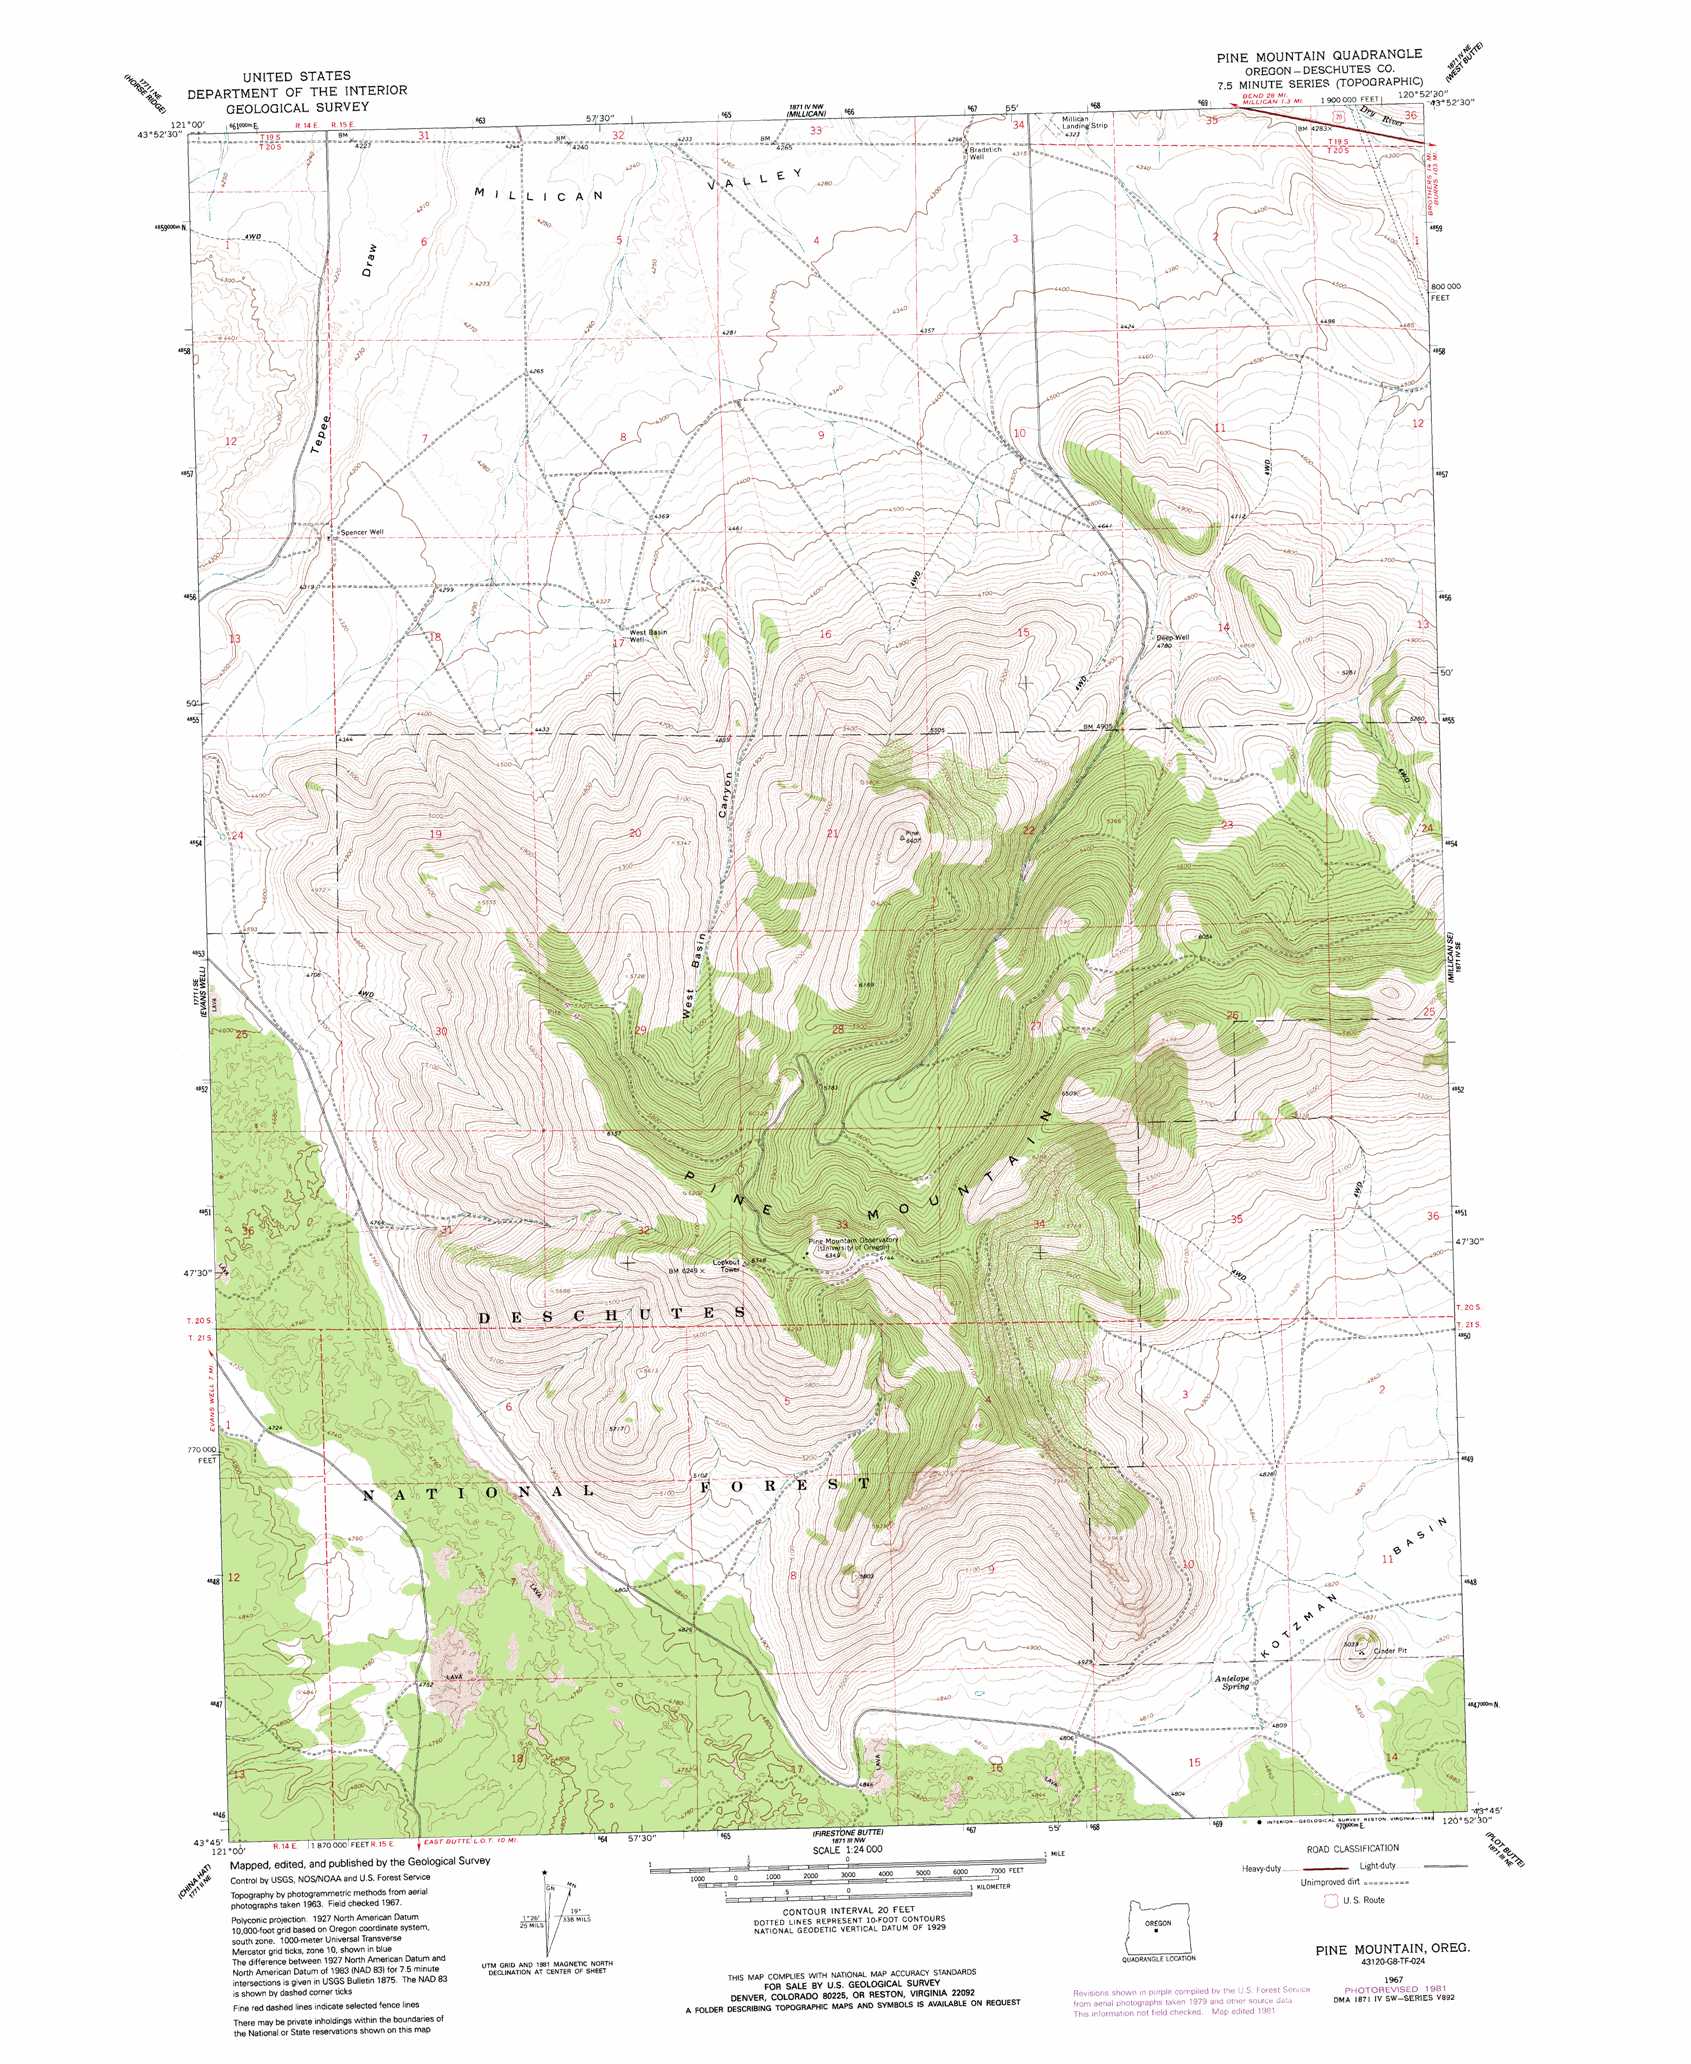 Pine Mountain topographic map, OR - USGS Topo Quad 43120g8